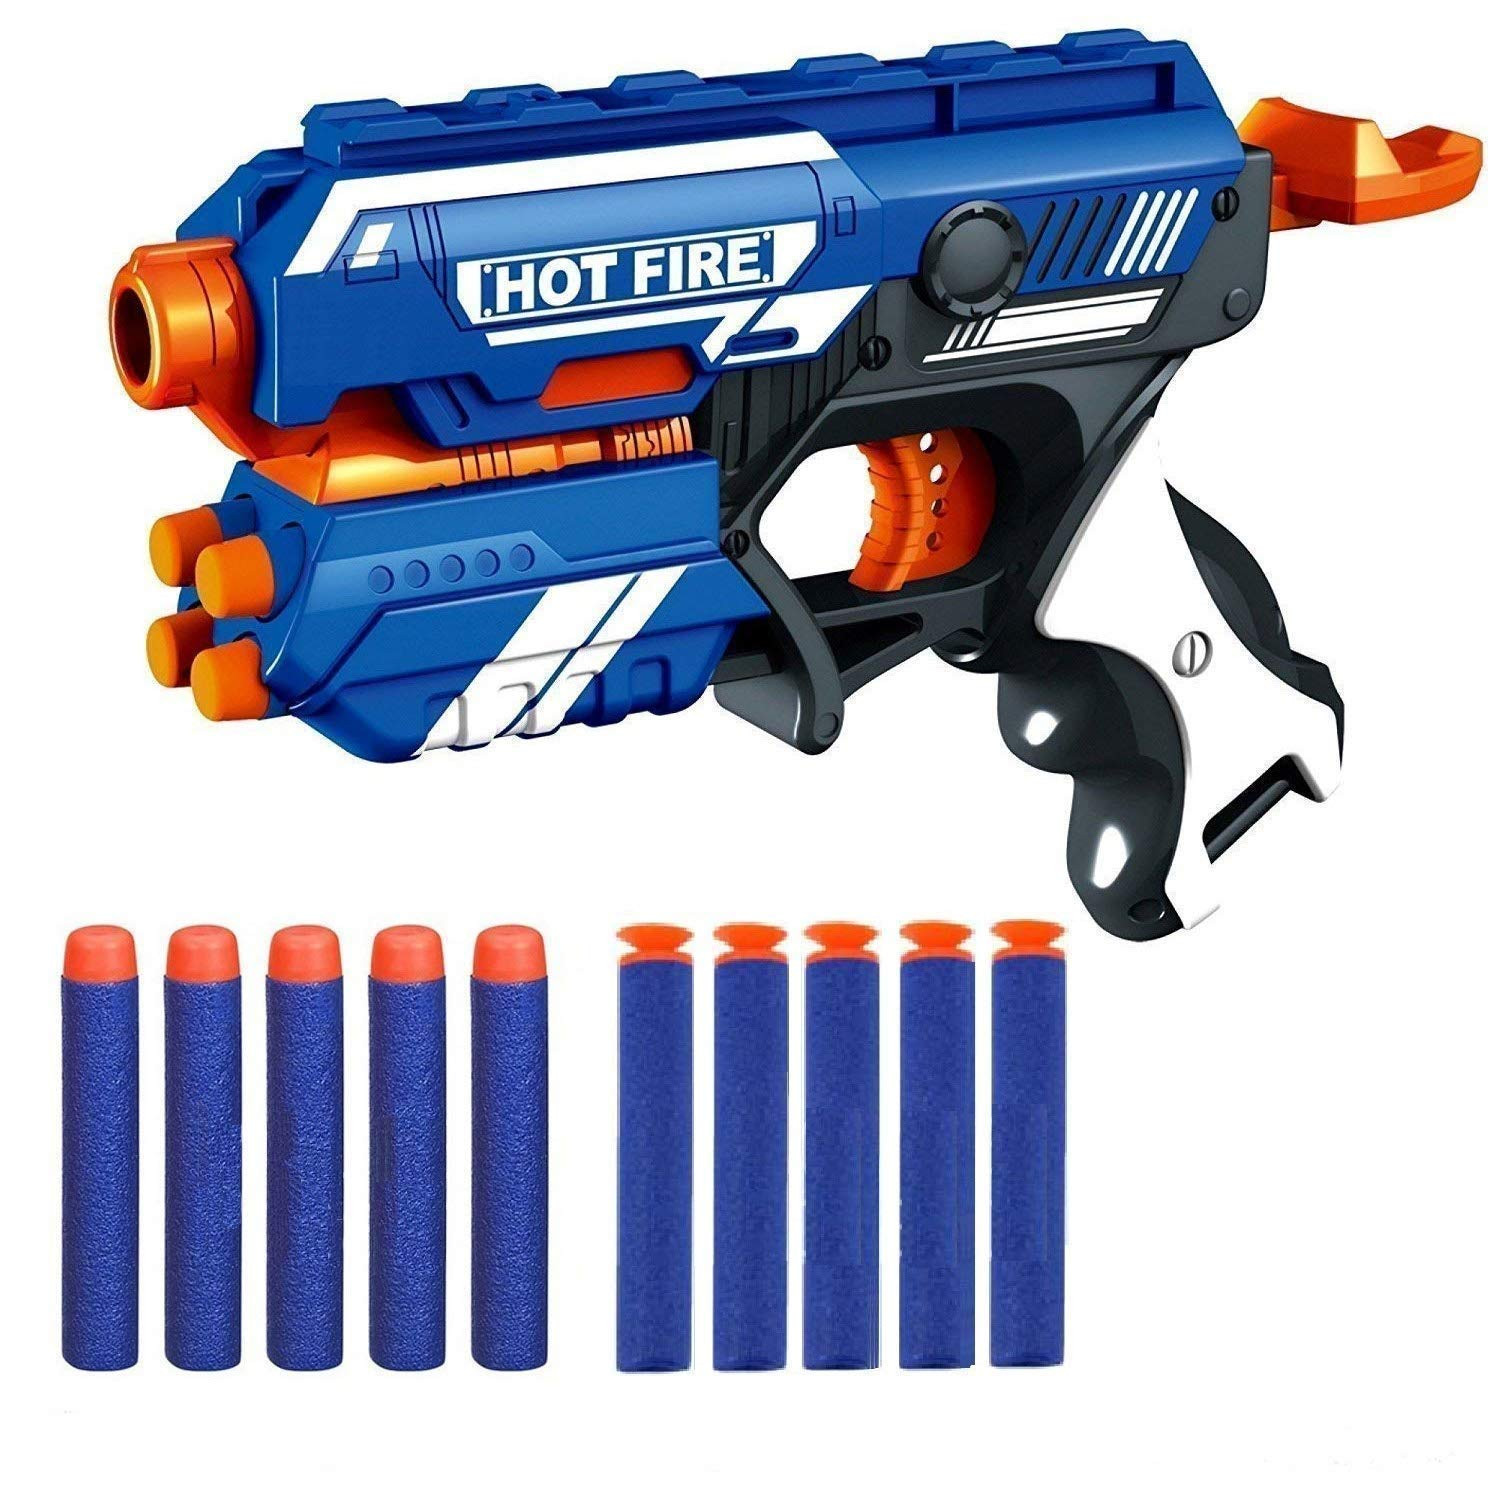 Blaze Storm Hot Fire Dart Gun Toy @ just 239 with 10 Safe Soft Foam Bullets, Fun Target Shooting Battle Fight Game for Kids Boys (Storm- Hot Fire)